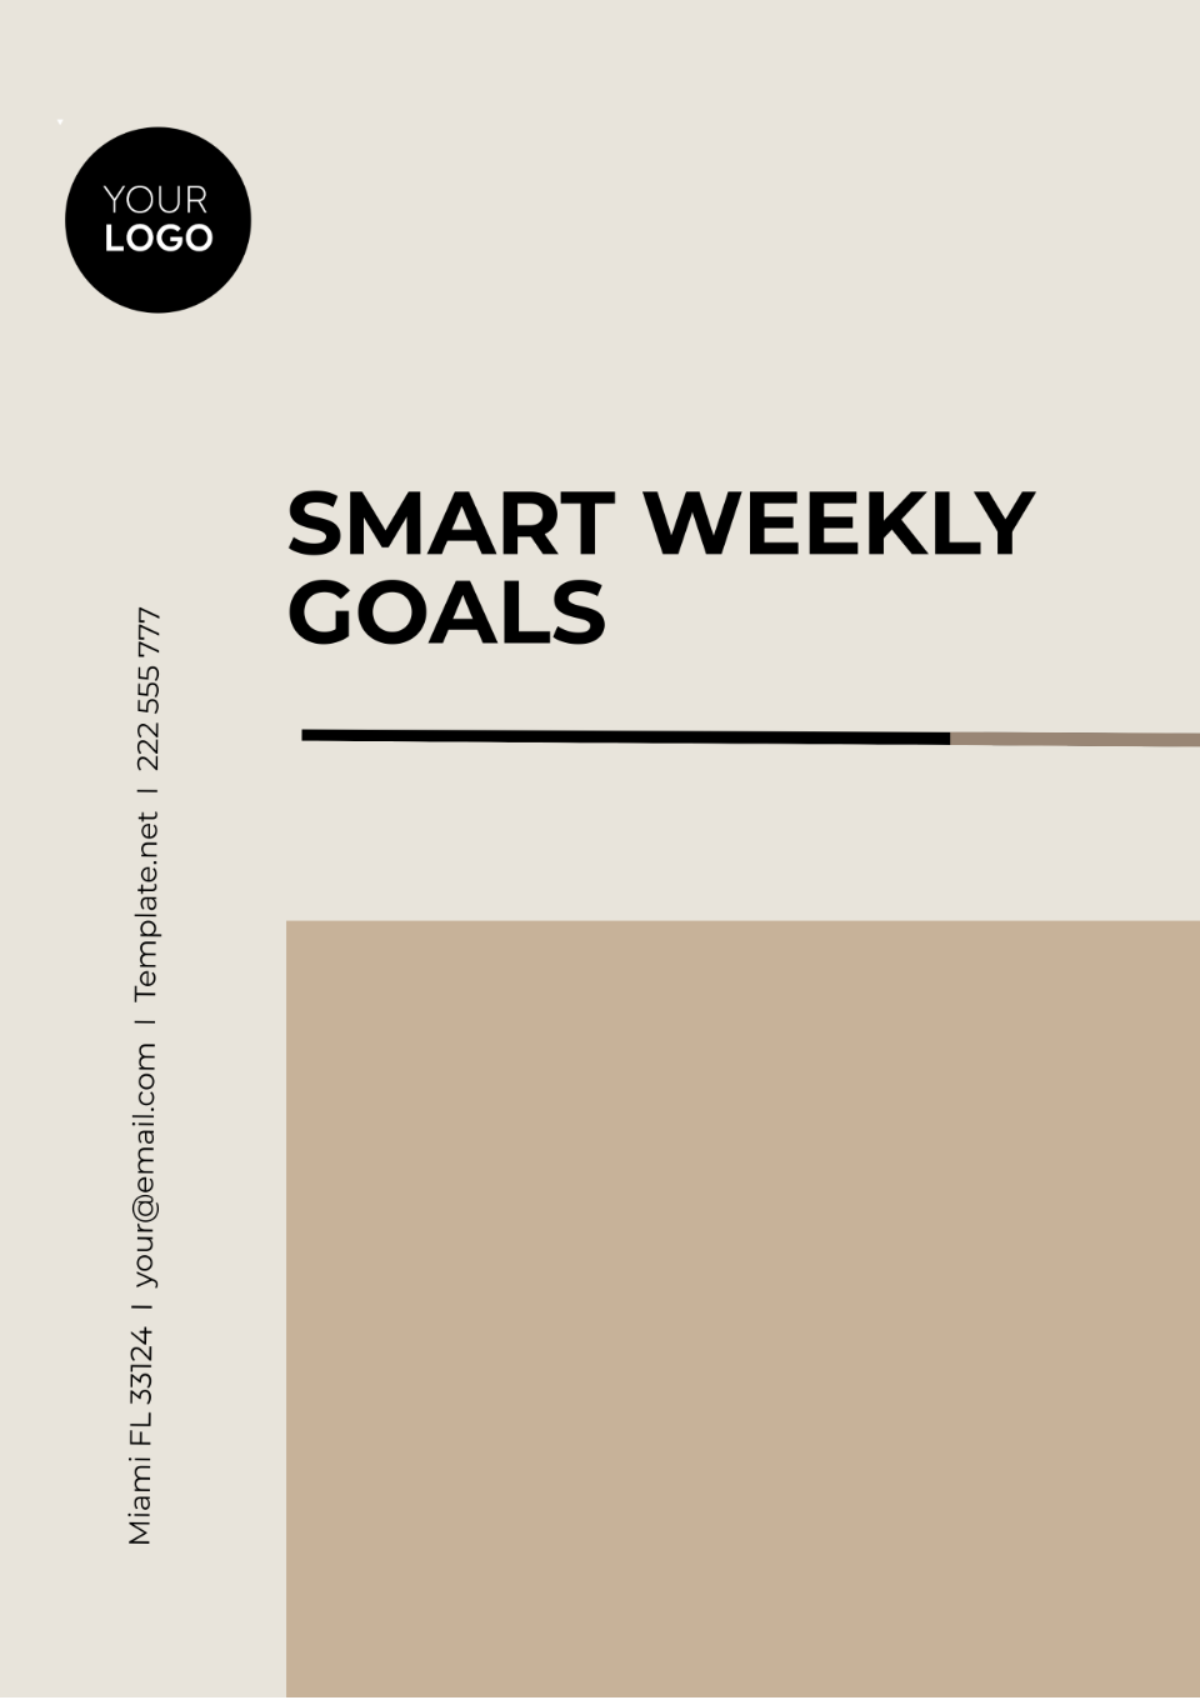 SMART Weekly Goals Template